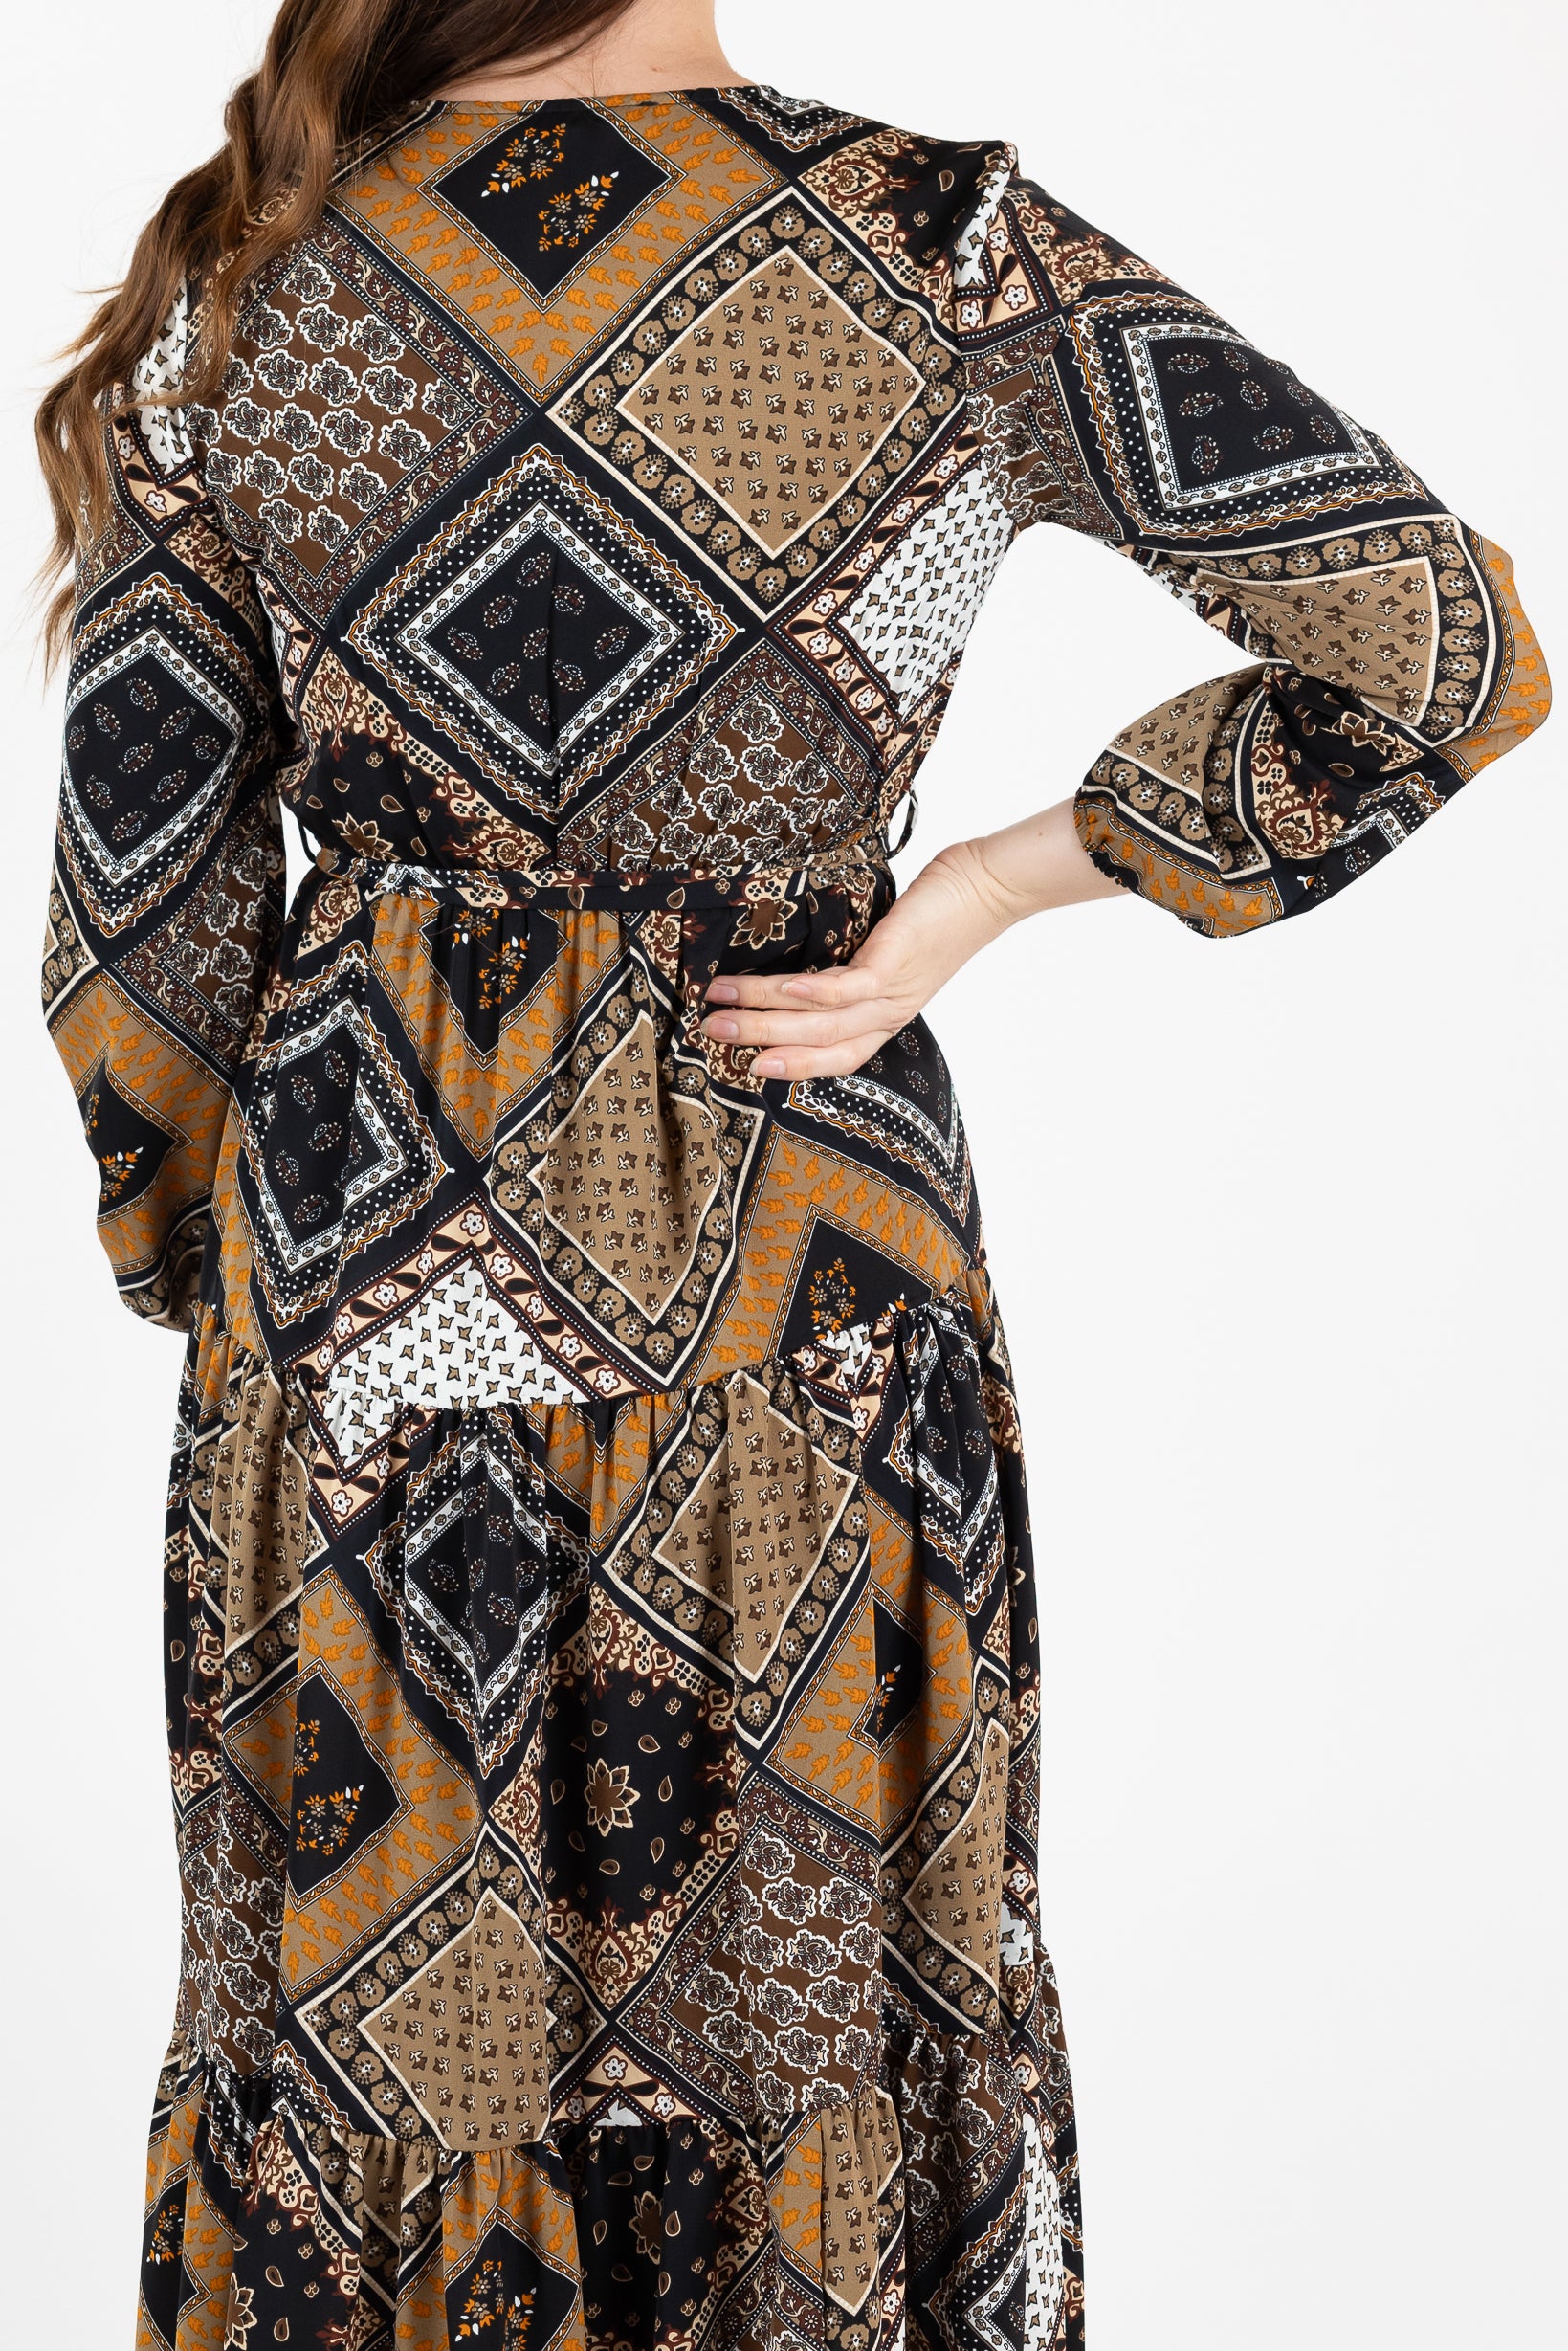 90060-BRN-dress-abaya